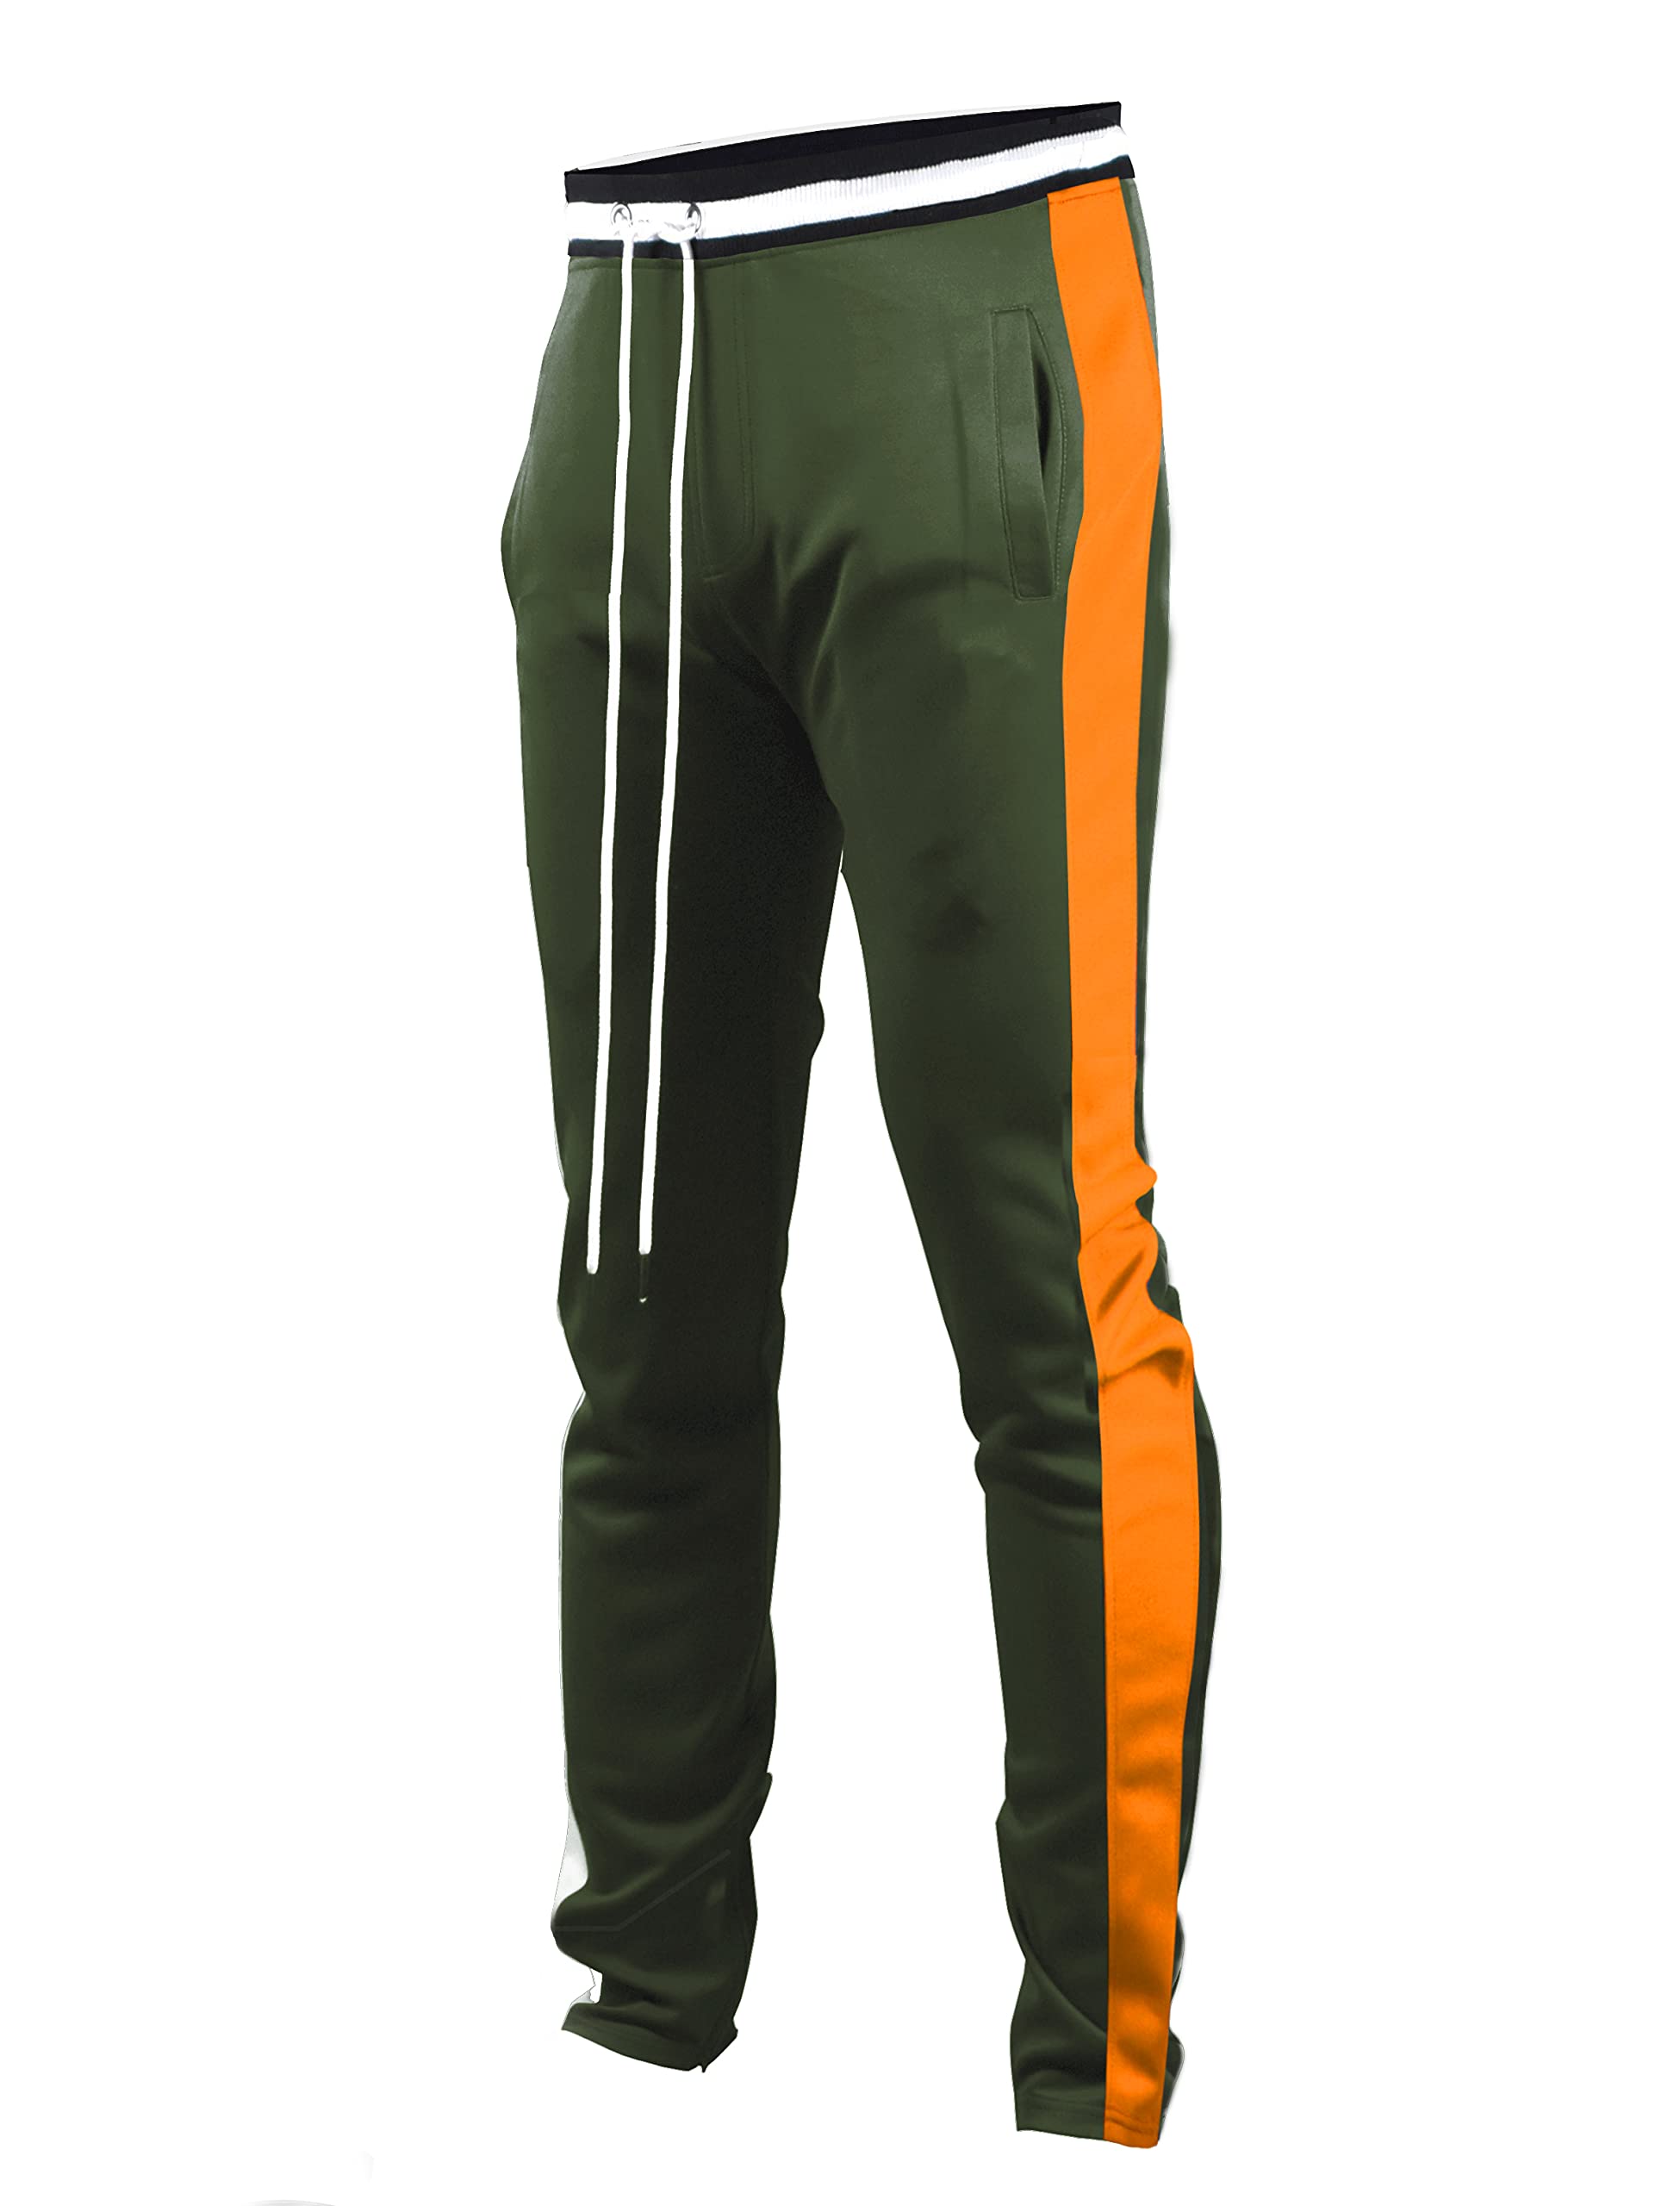 Screenshotbrand-S41700 Mens Hip Hop Premium Slim Fit Track Pants - Athletic Jogger Bottom With Side Taping-Oliveorange-Medium